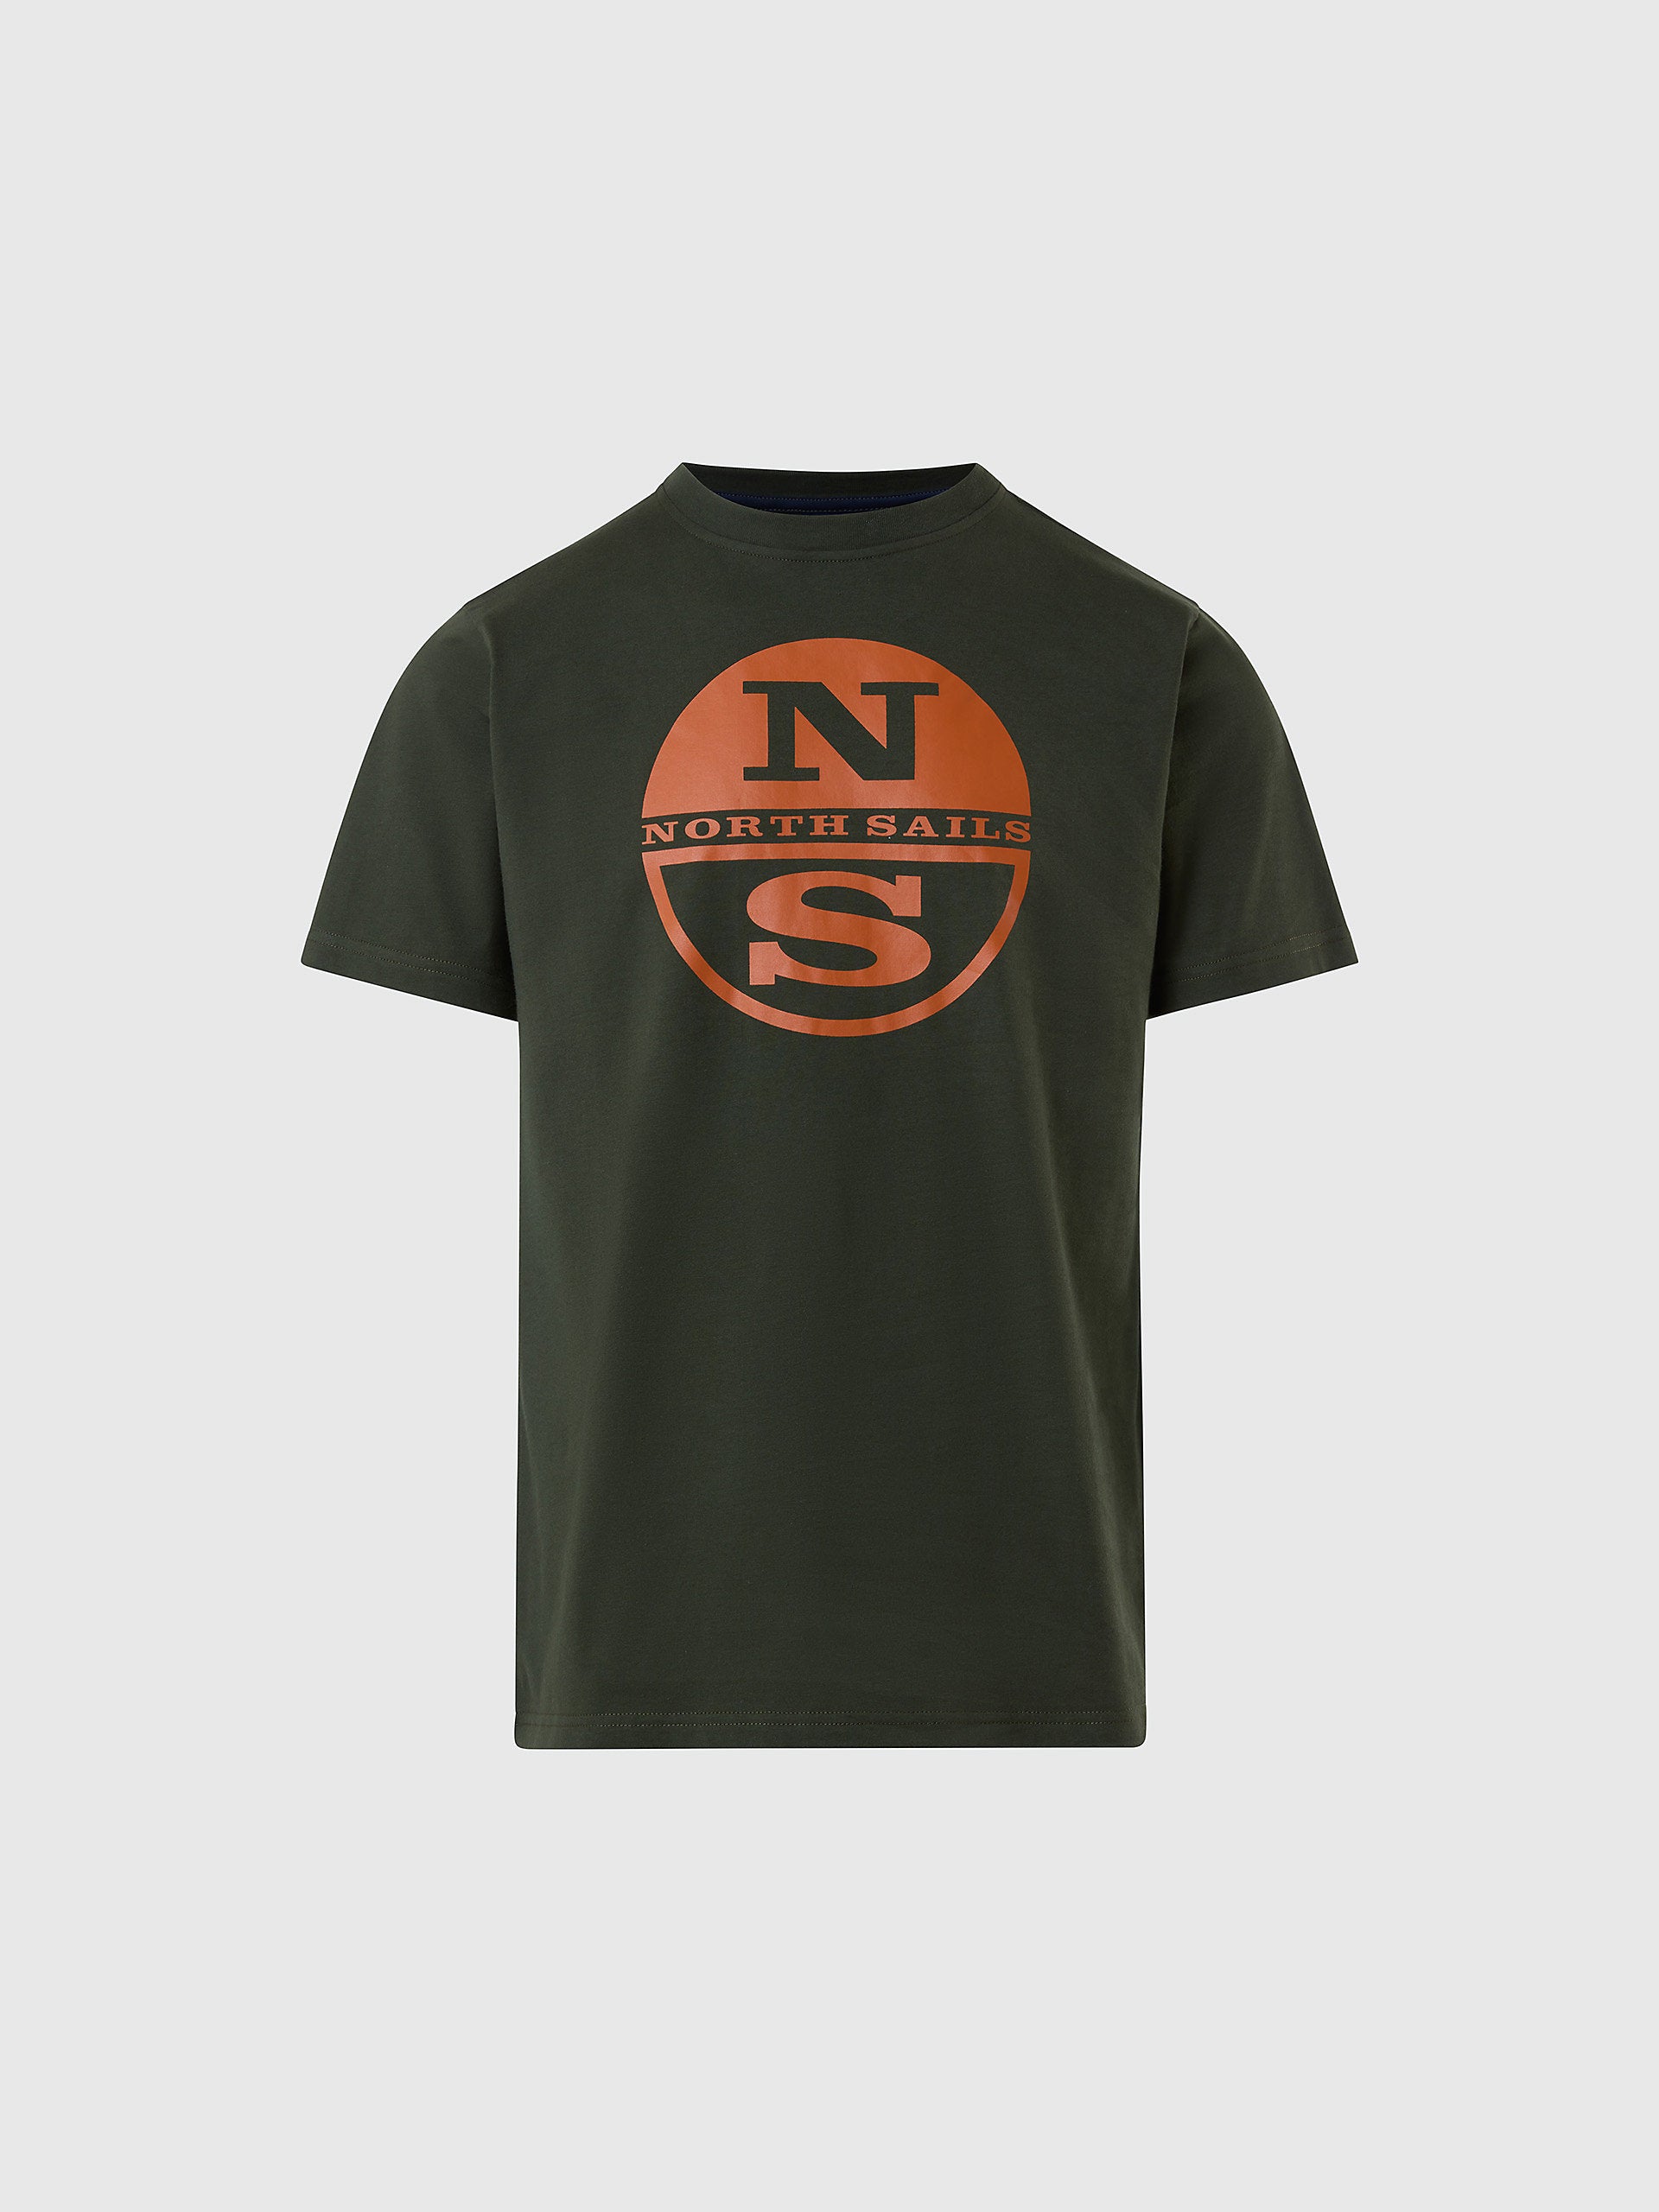 North Sails - T-shirt with logo printNorth SailsForest nightS